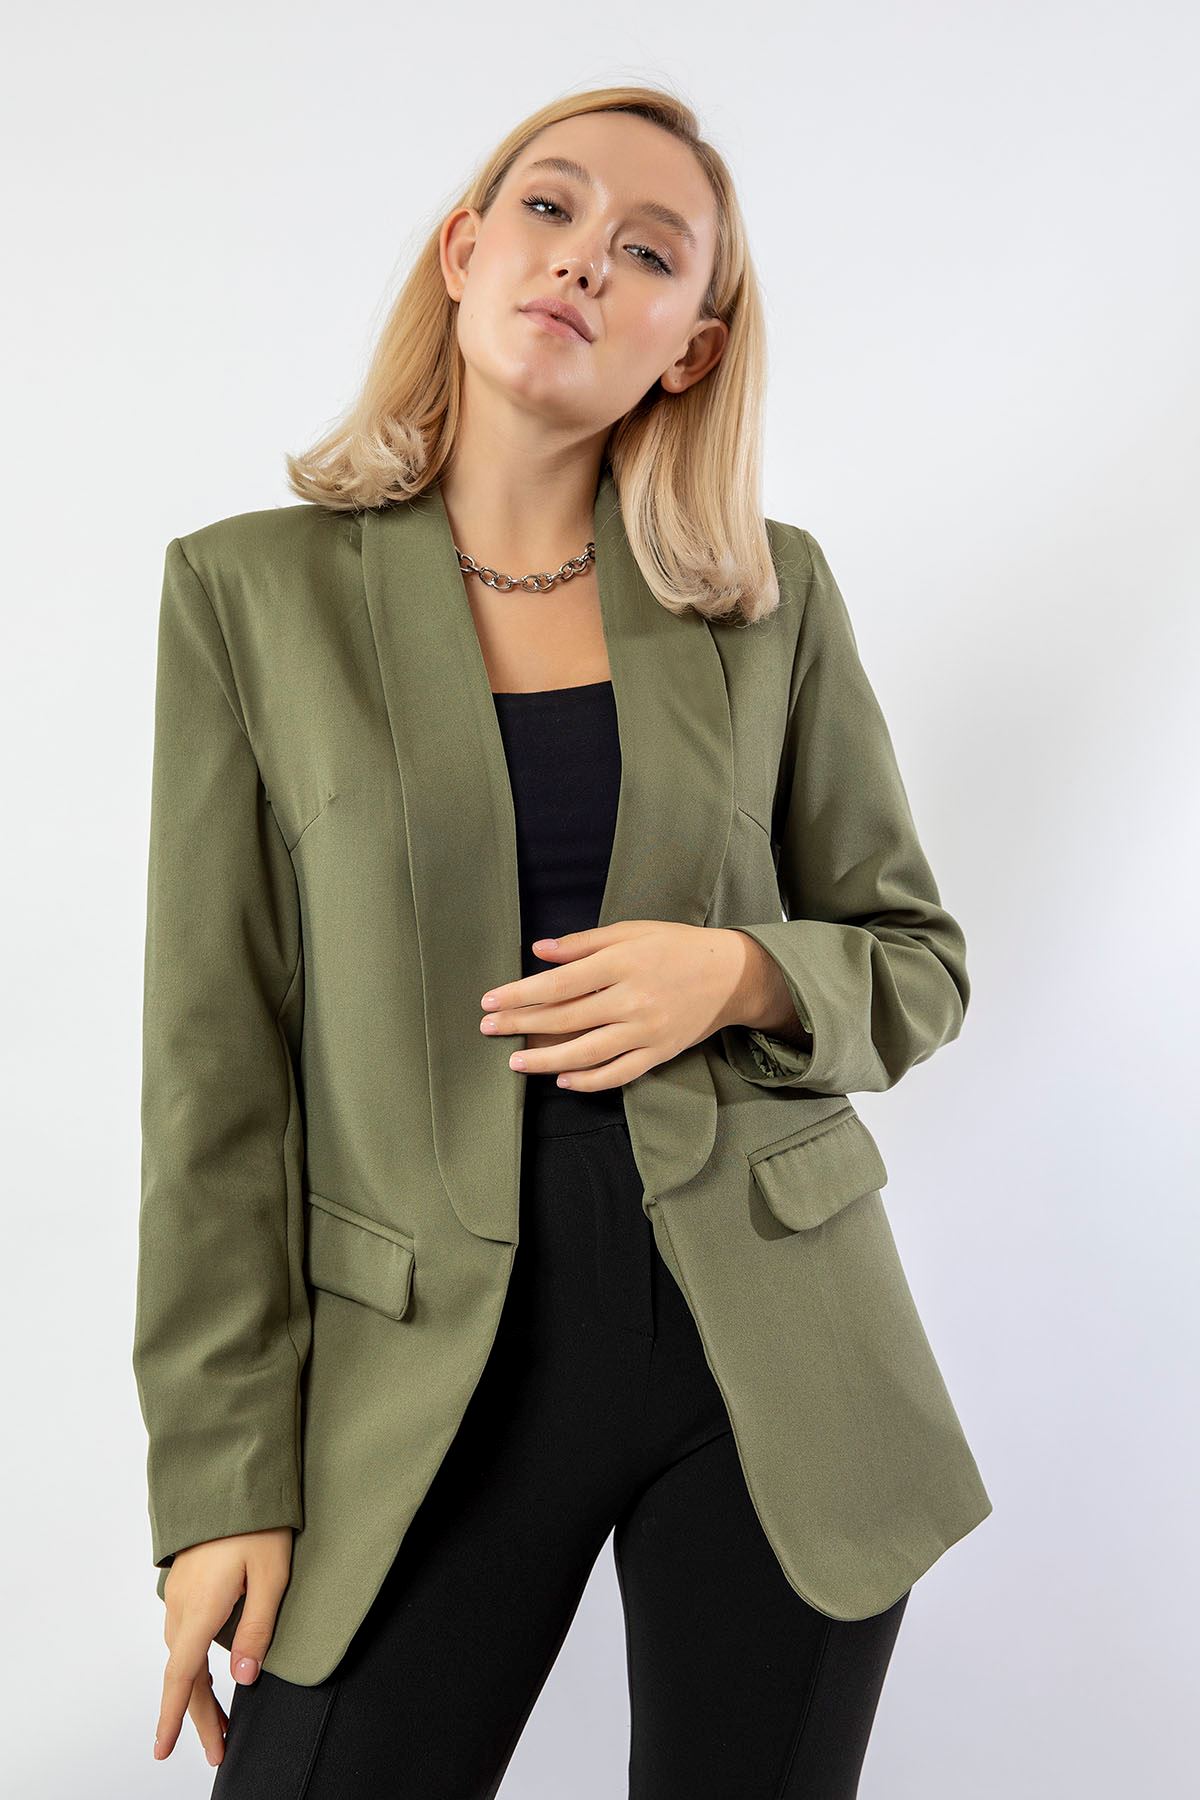 Atlas Fabric Long Sleeve Shawl Collar Blazer Women Jacket - Khaki 